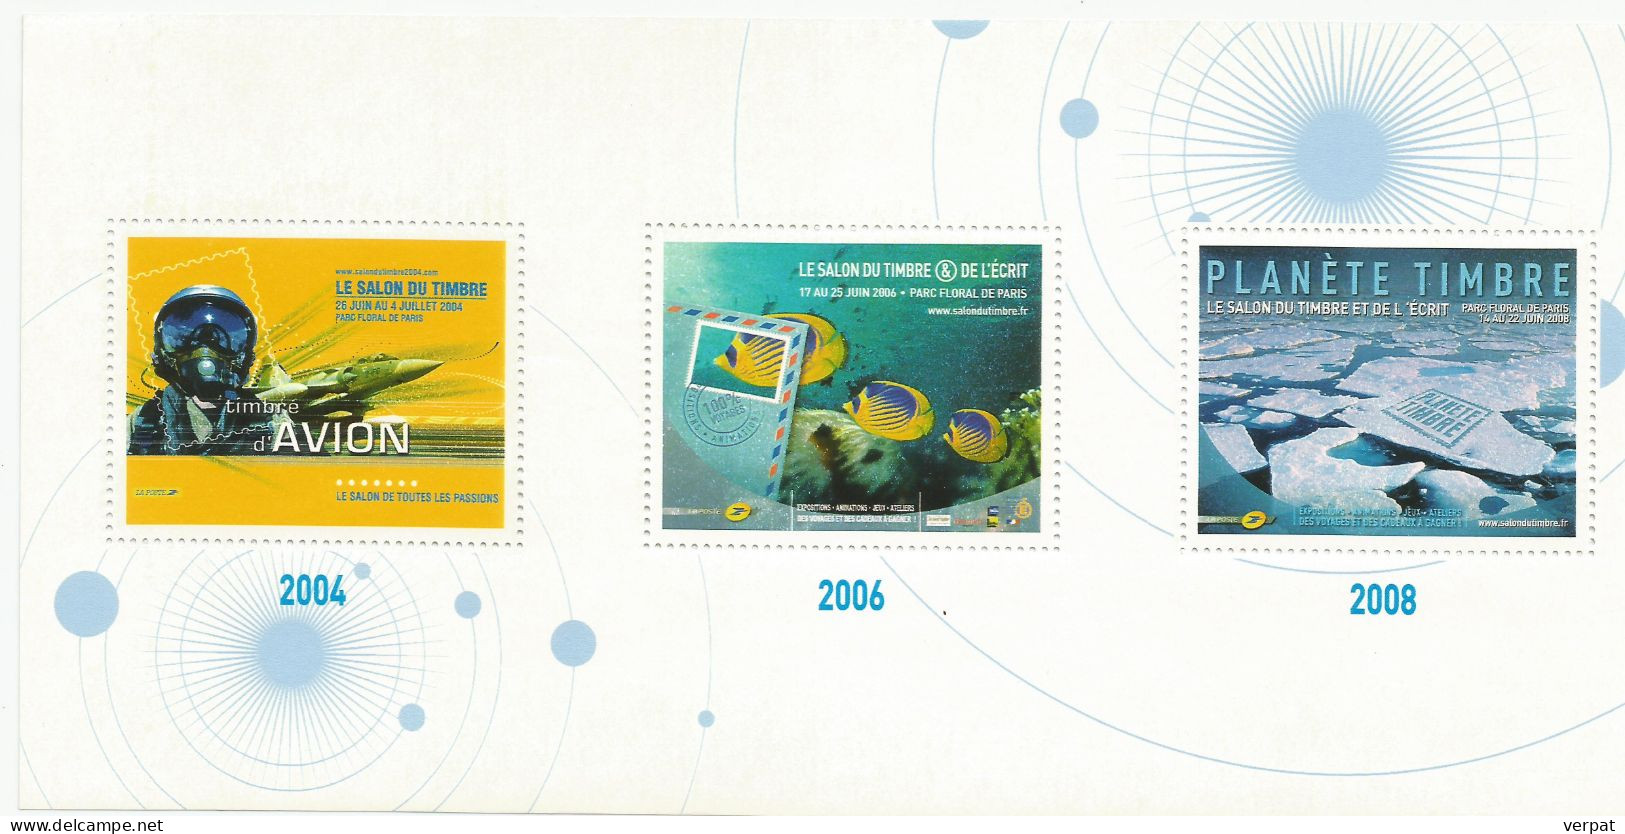 Planete Timbre Salon Du Timbre 2004 2006 2008 - Briefmarkenmessen